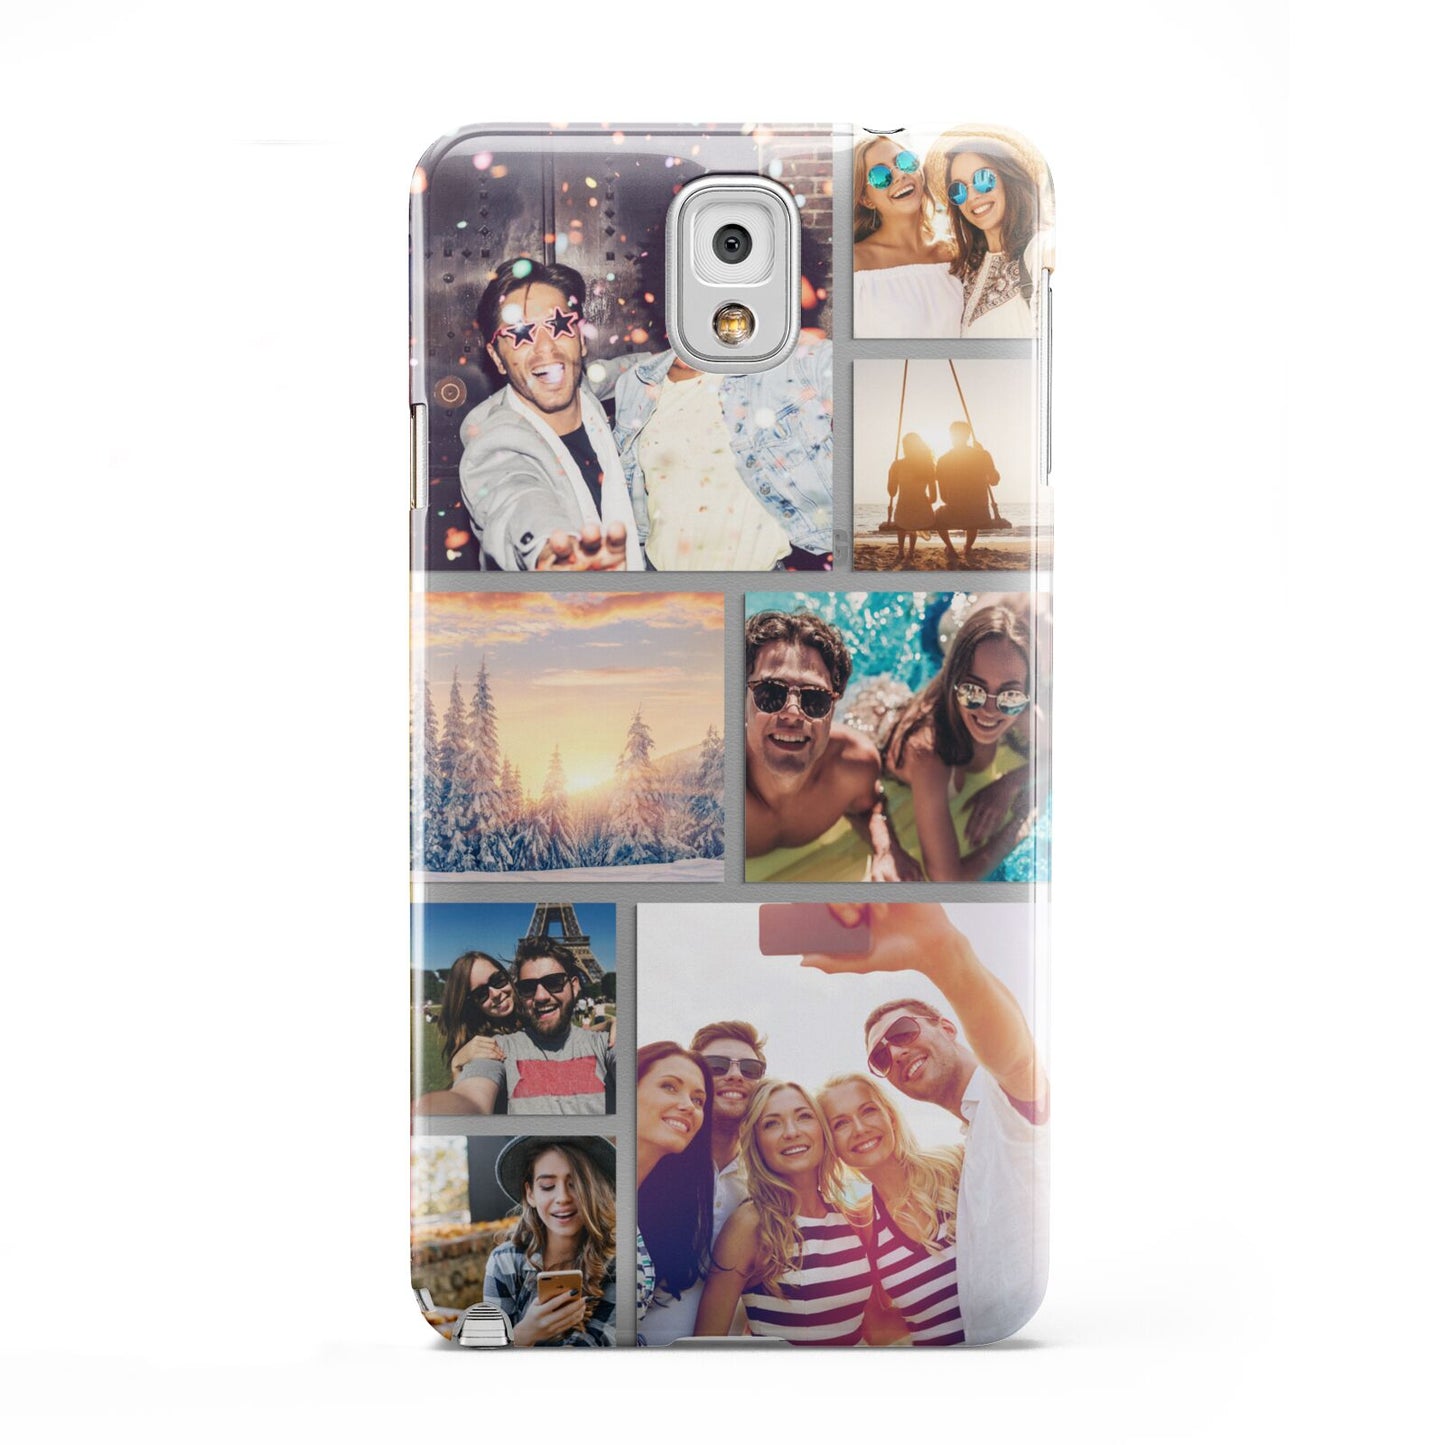 Photo Collage Samsung Galaxy Note 3 Case